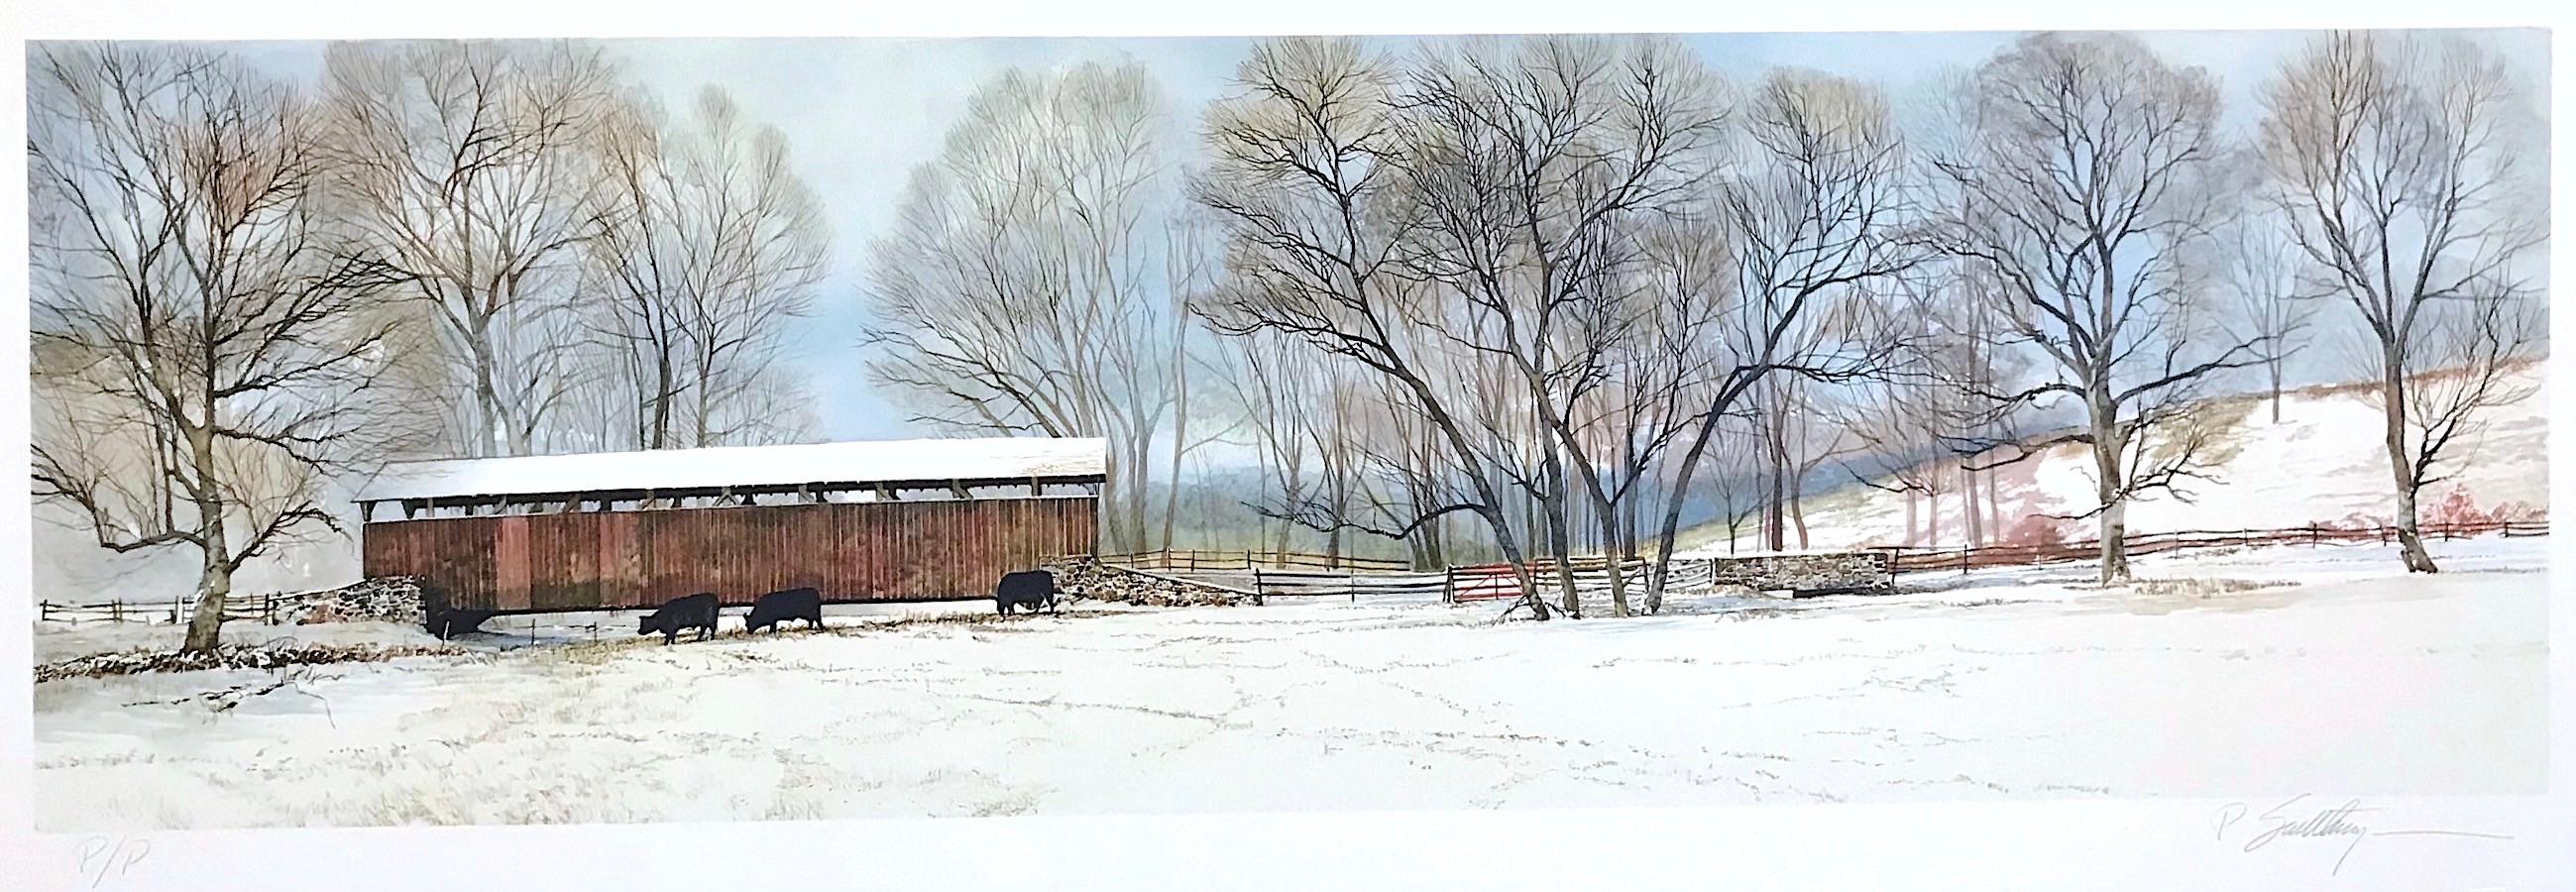 Peter Sculthorpe Landscape Print - BUCK RUN BRIDGE Signed Lithograph Historic Covered Bridge, Snowy Landscape, Cows